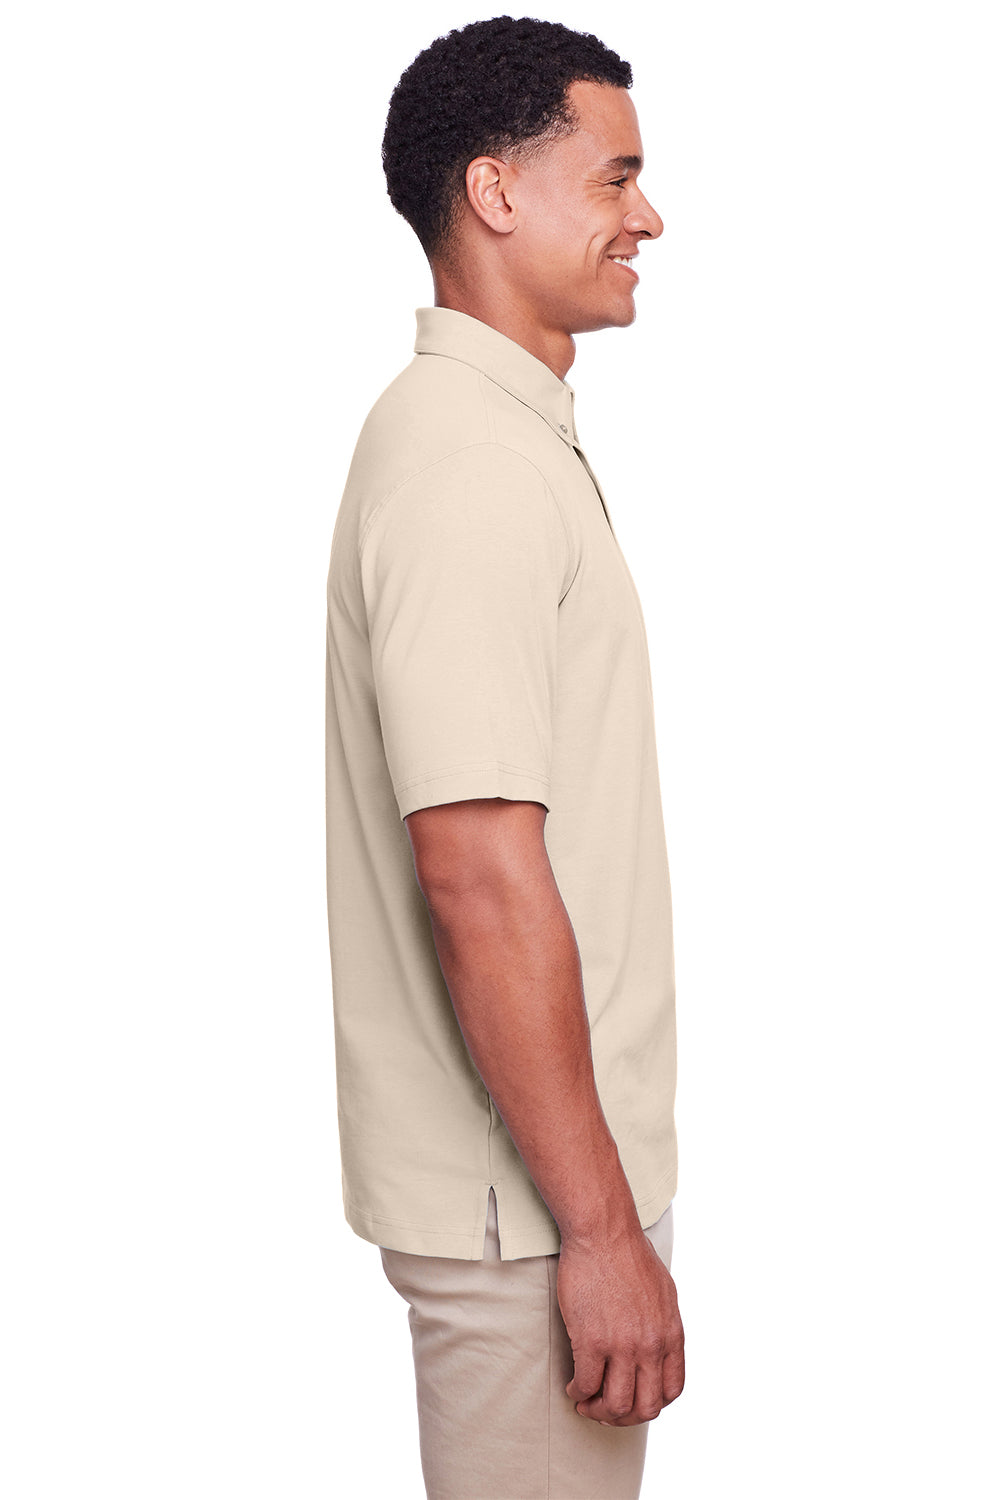 UltraClub UC105 Mens Lakeshore Performance Moisture Wicking Short Sleeve Polo Shirt Stone Brown Side